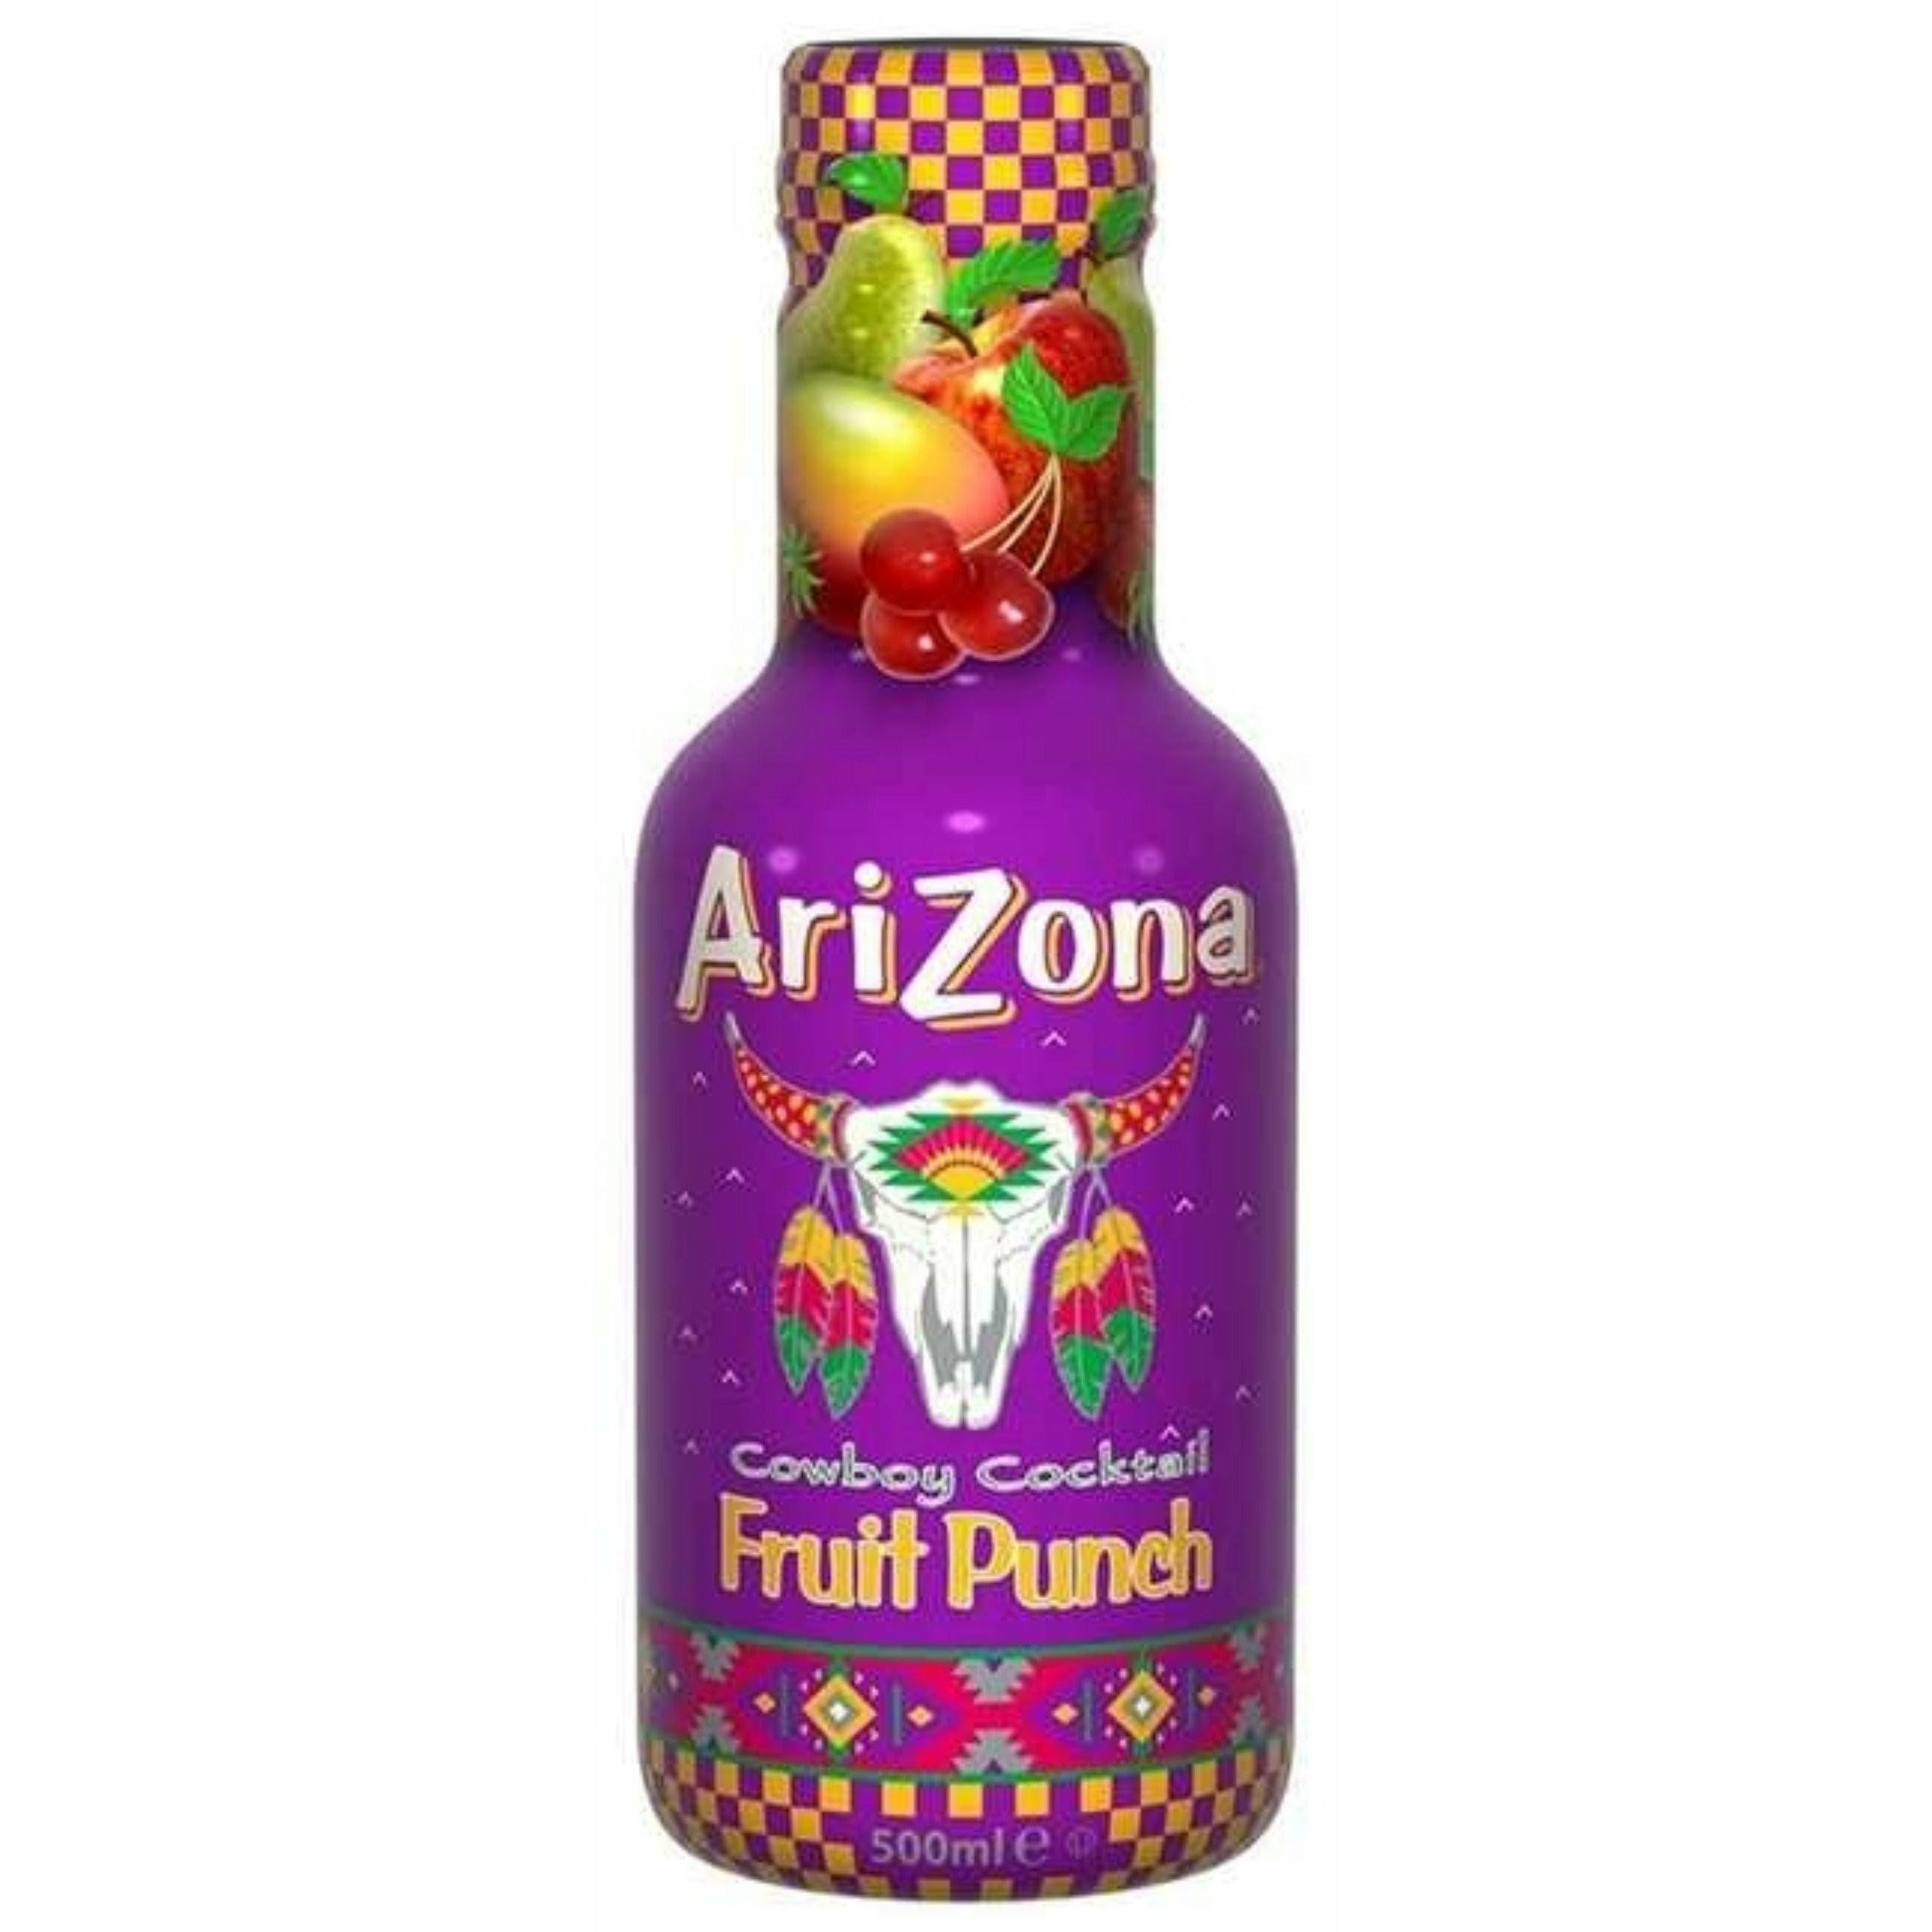 Arizona Cowboy Cocktail - Fruit Punch, 500ml